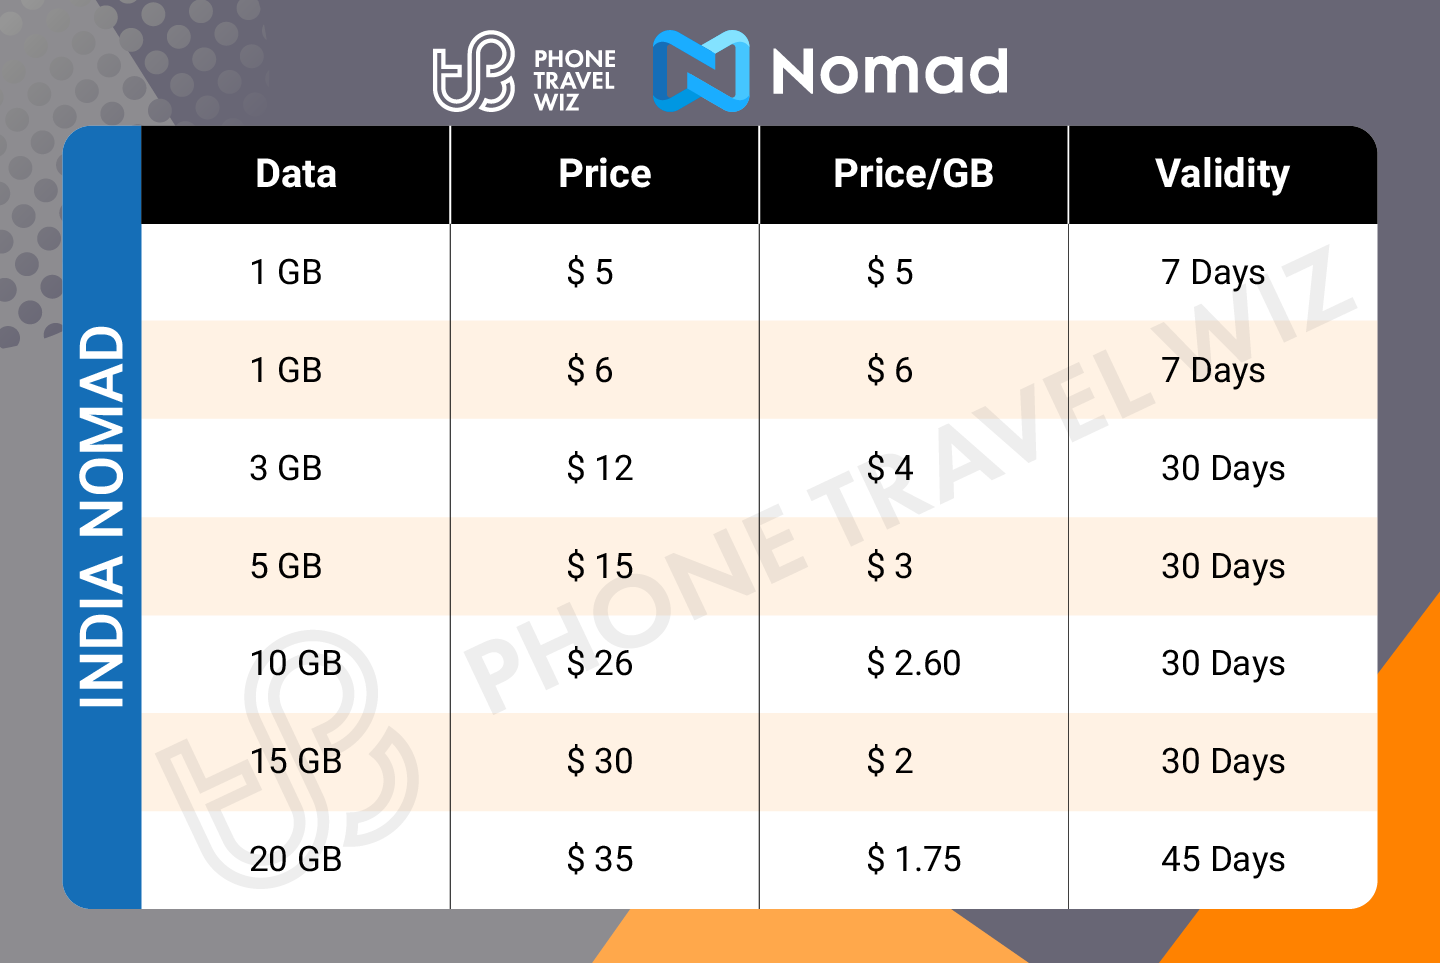 Nomad India eSIM Price & Data Details Infographic by Phone Travel Wiz